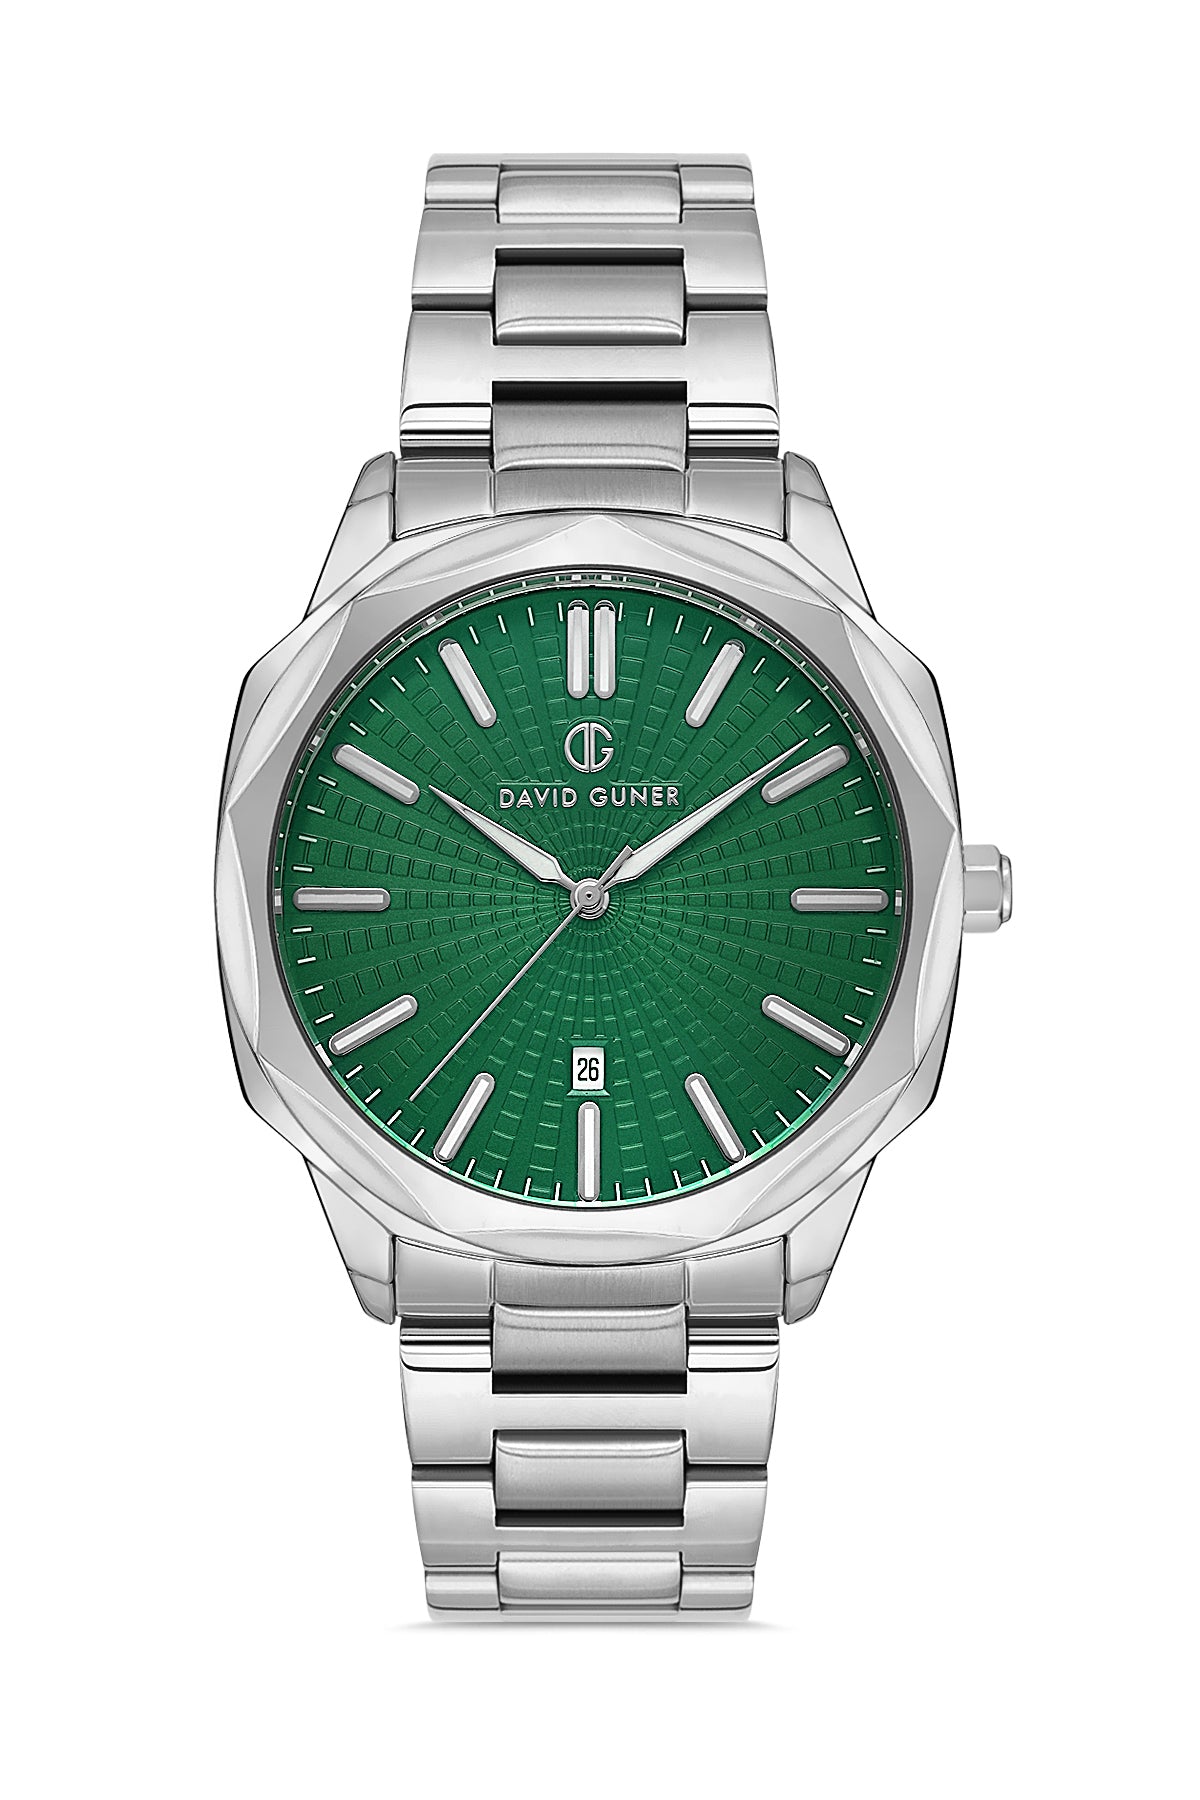 DAVID GUNER Silver Plated Green Dial Men's Wristwatch